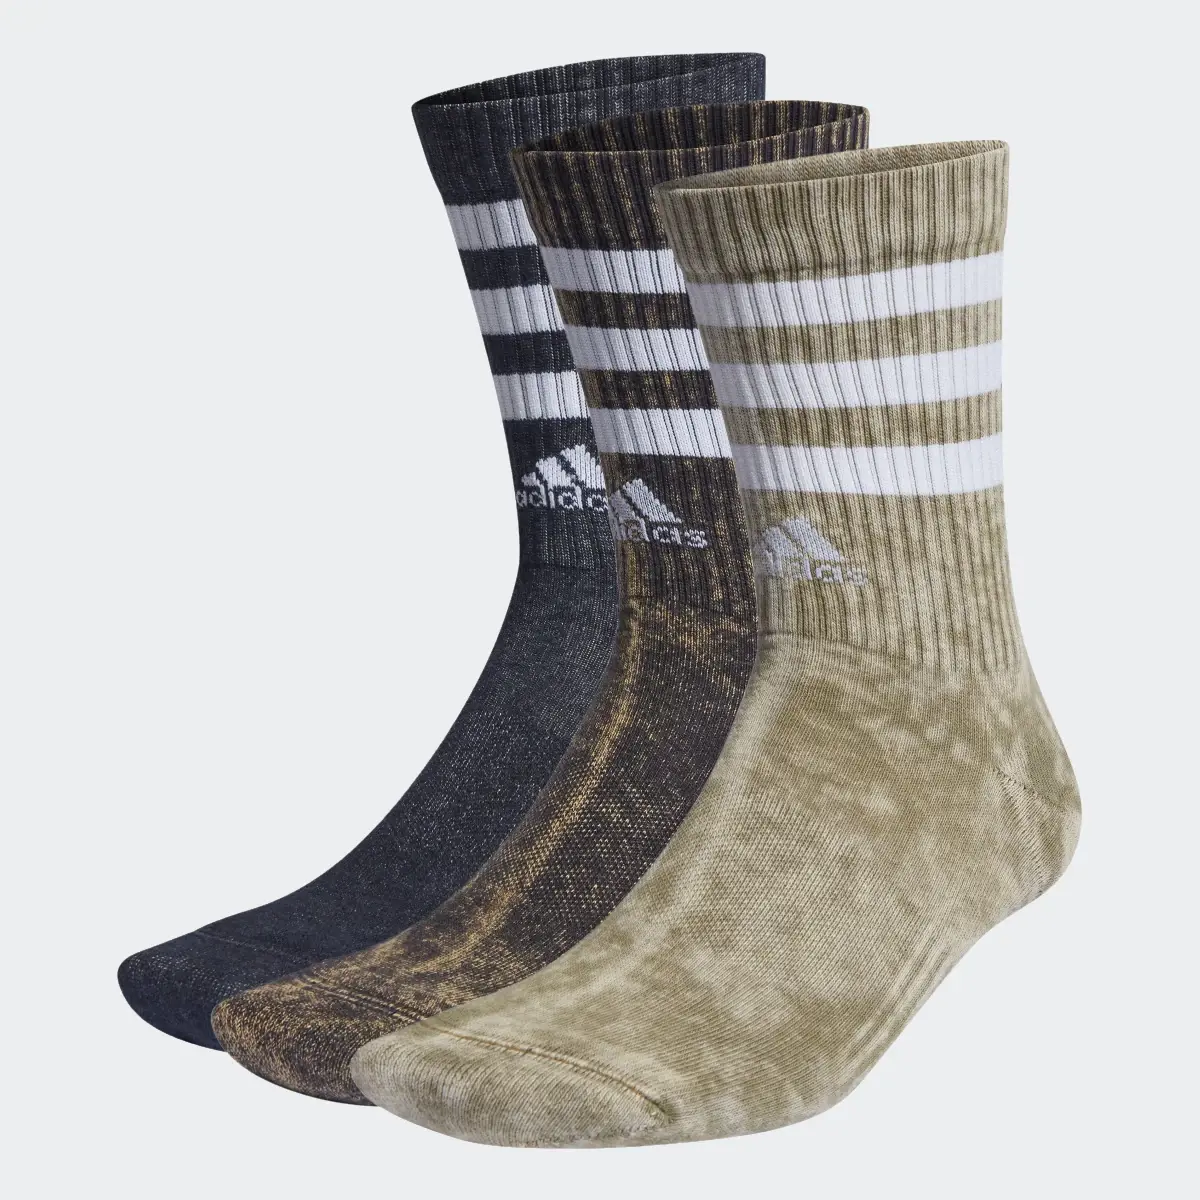 Adidas 3-Stripes Stonewash Bilekli Çorap - 3 Çift. 1